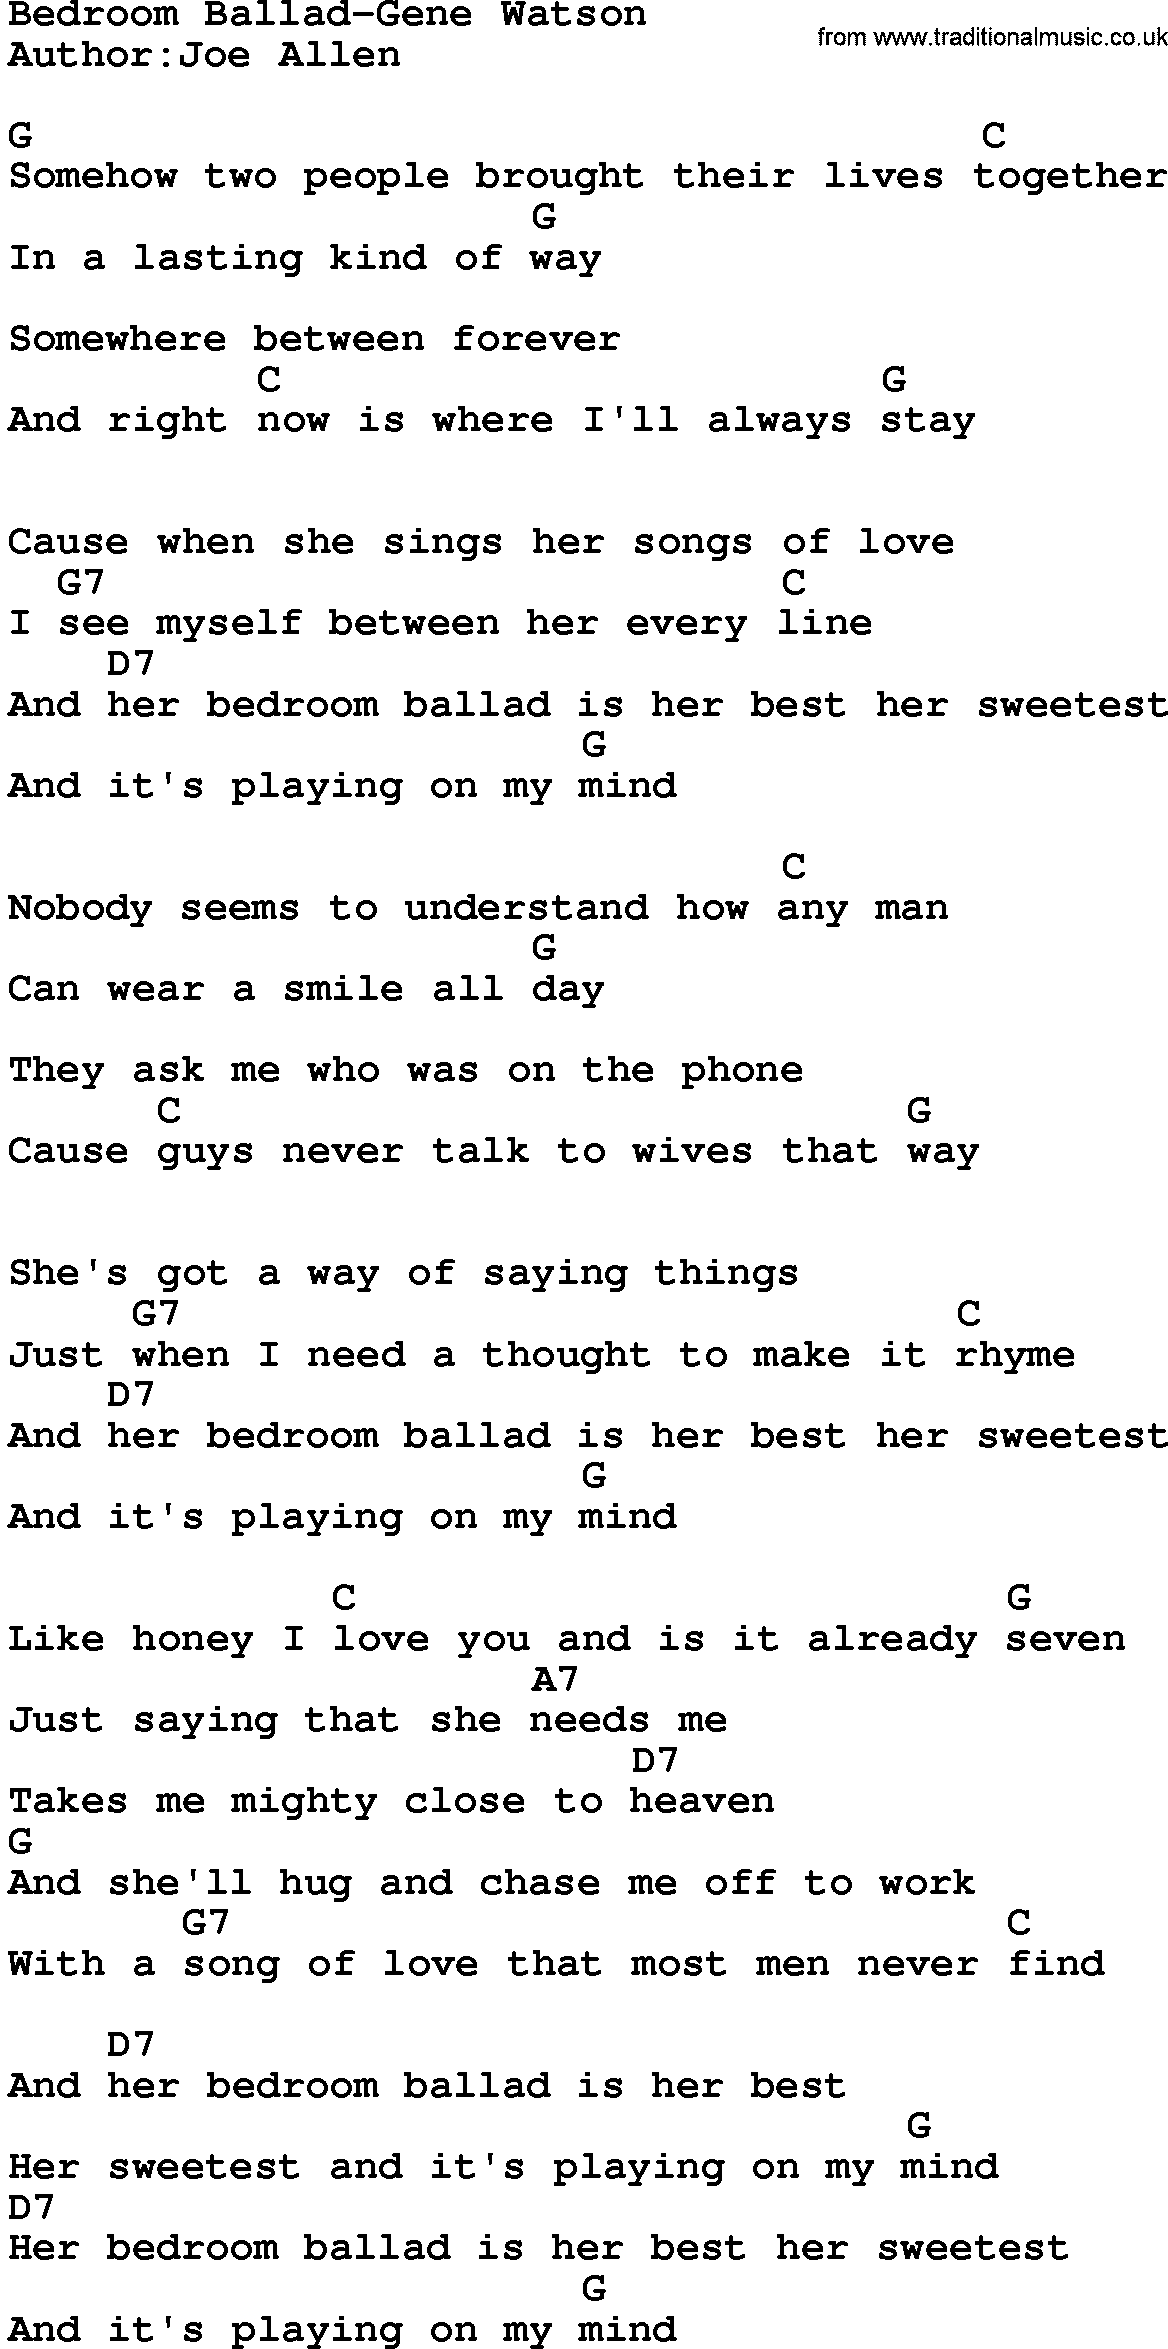 Country music song: Bedroom Ballad-Gene Watson lyrics and chords